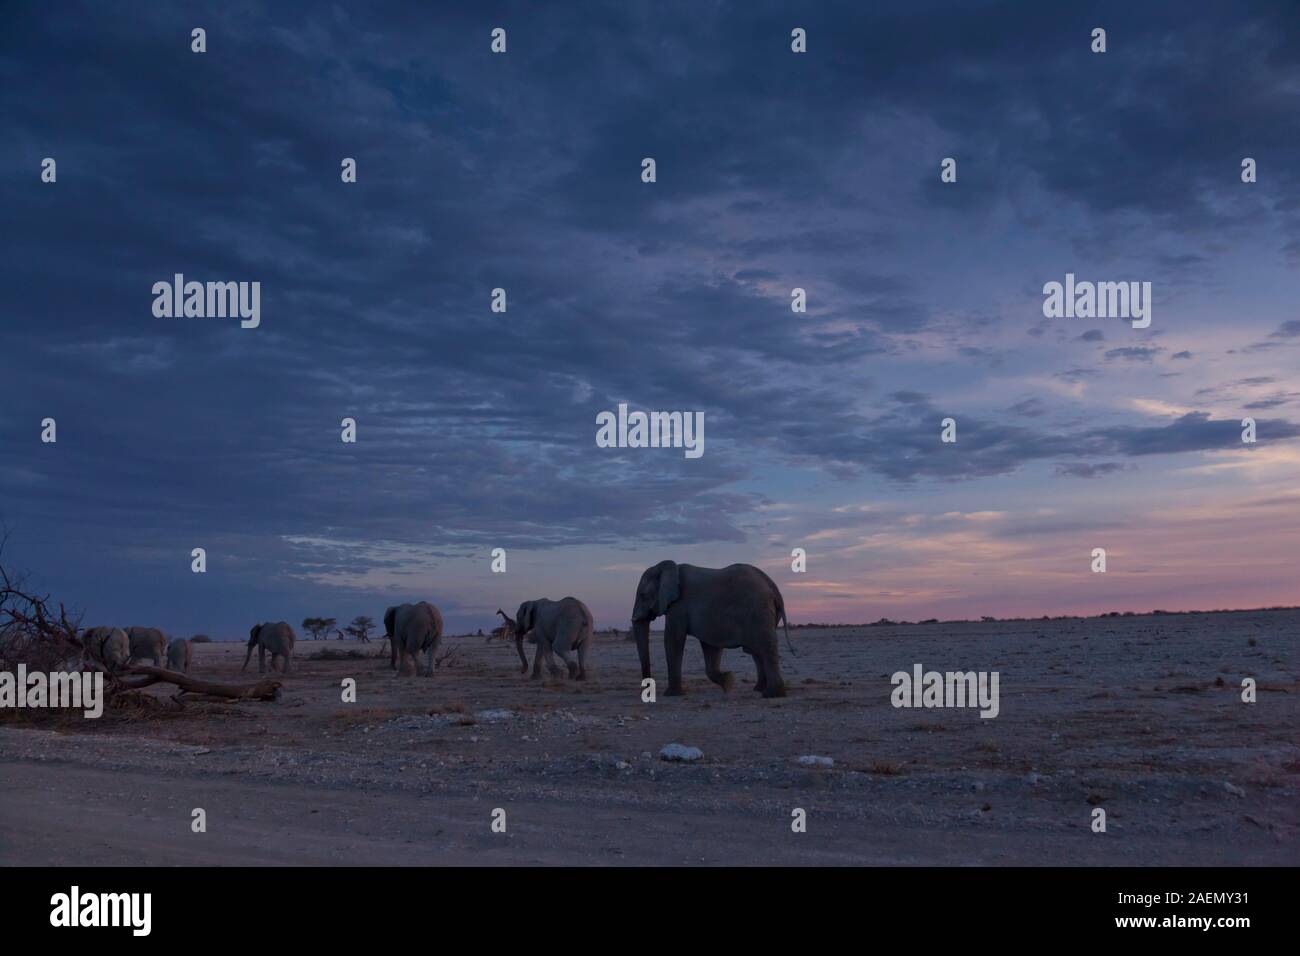 Elephants walking in twilight,on desert pan, salt pan, Etosha National Park, Namibia, Southern Africa, Africa Stock Photo